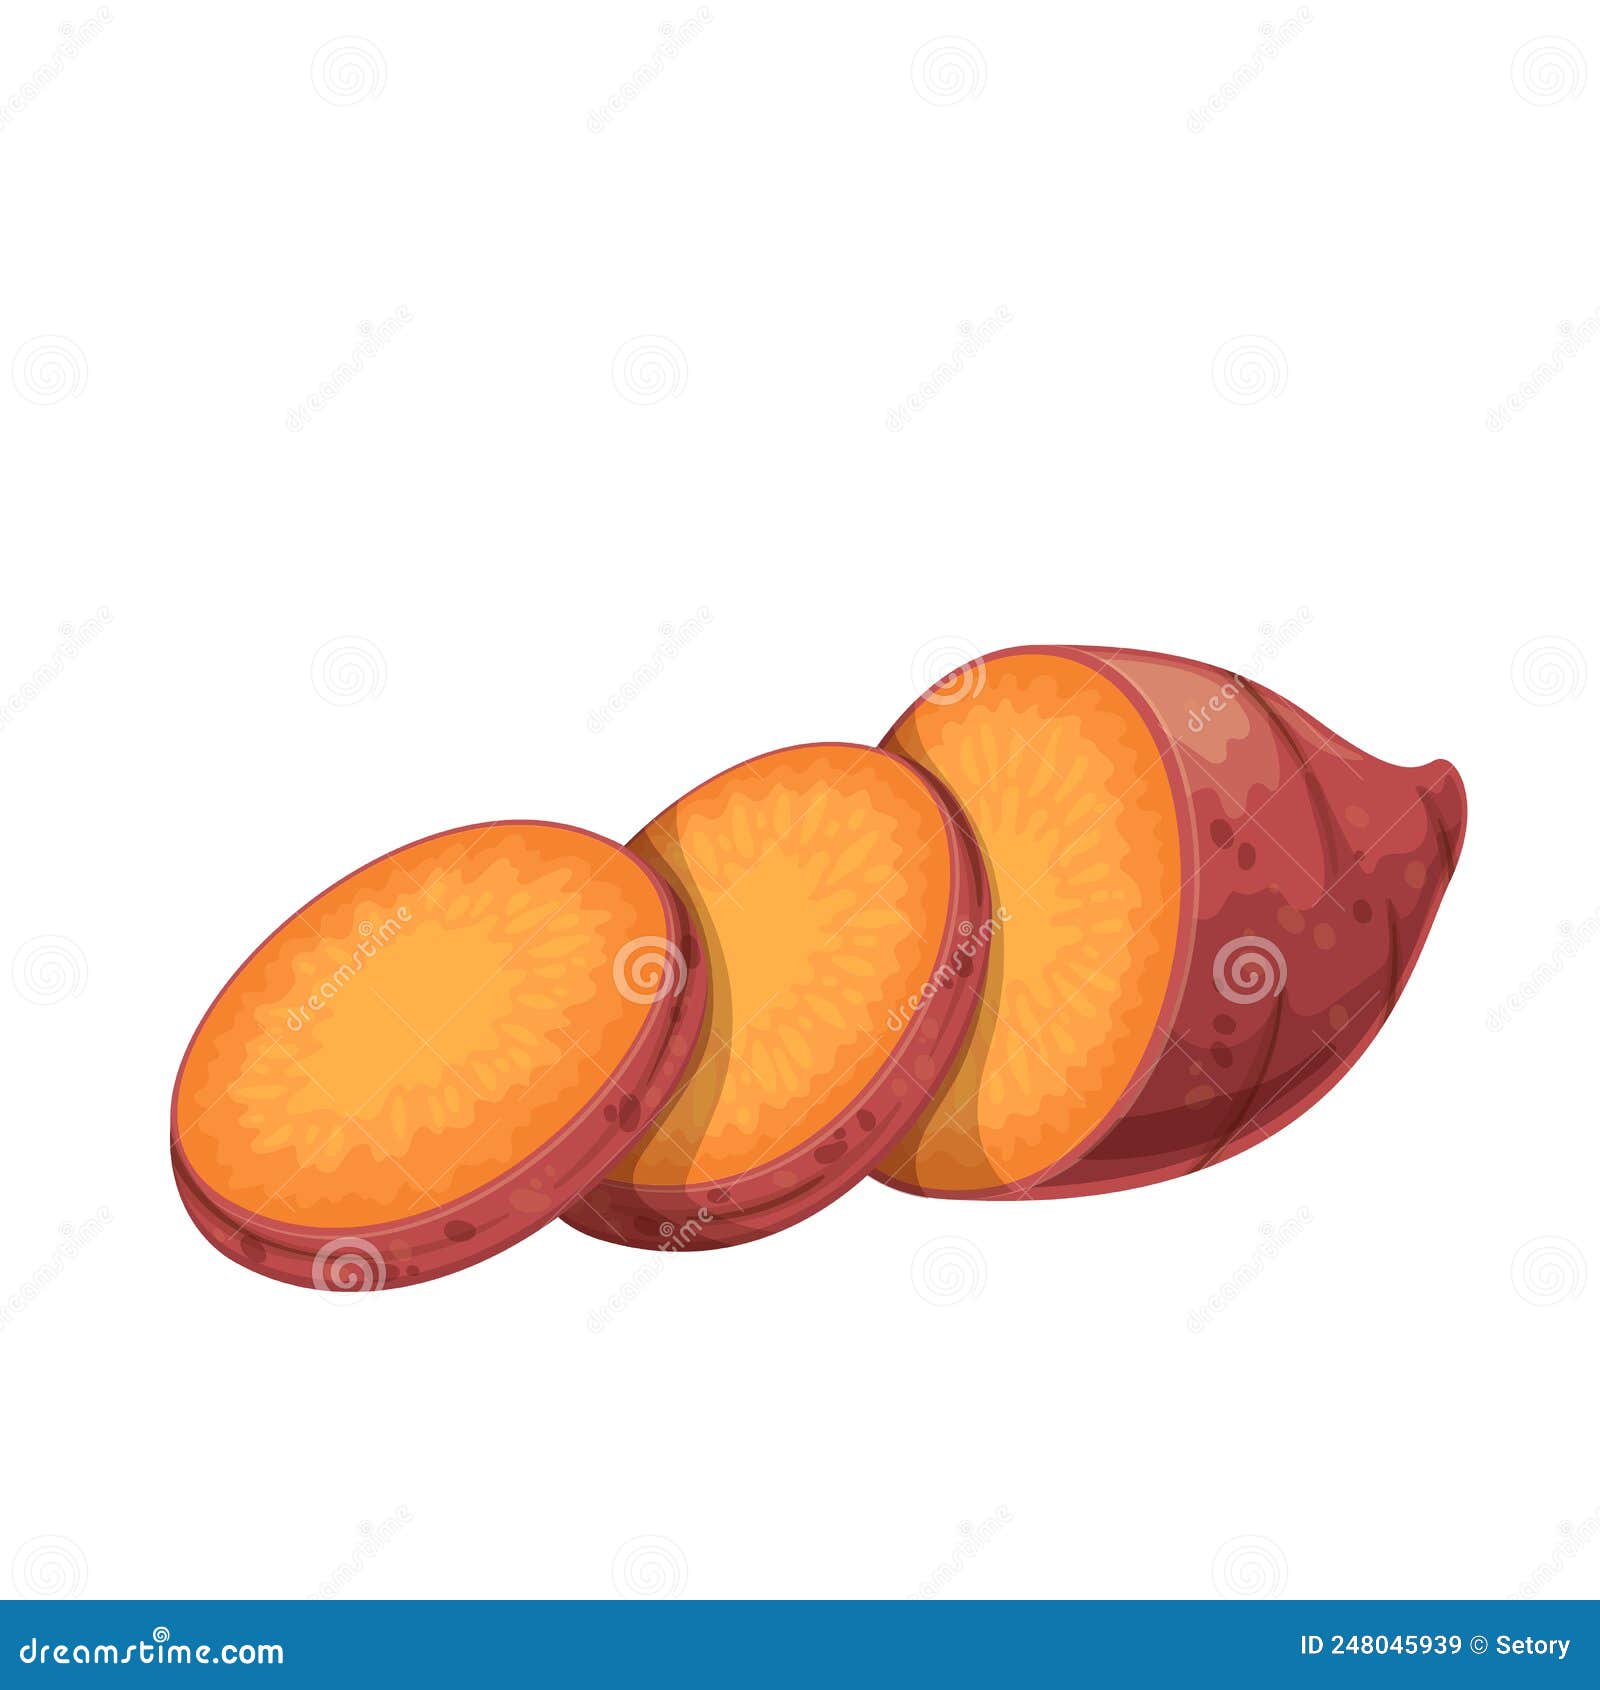 Sweet potato stock vector. Illustration of harvest, root - 248045939